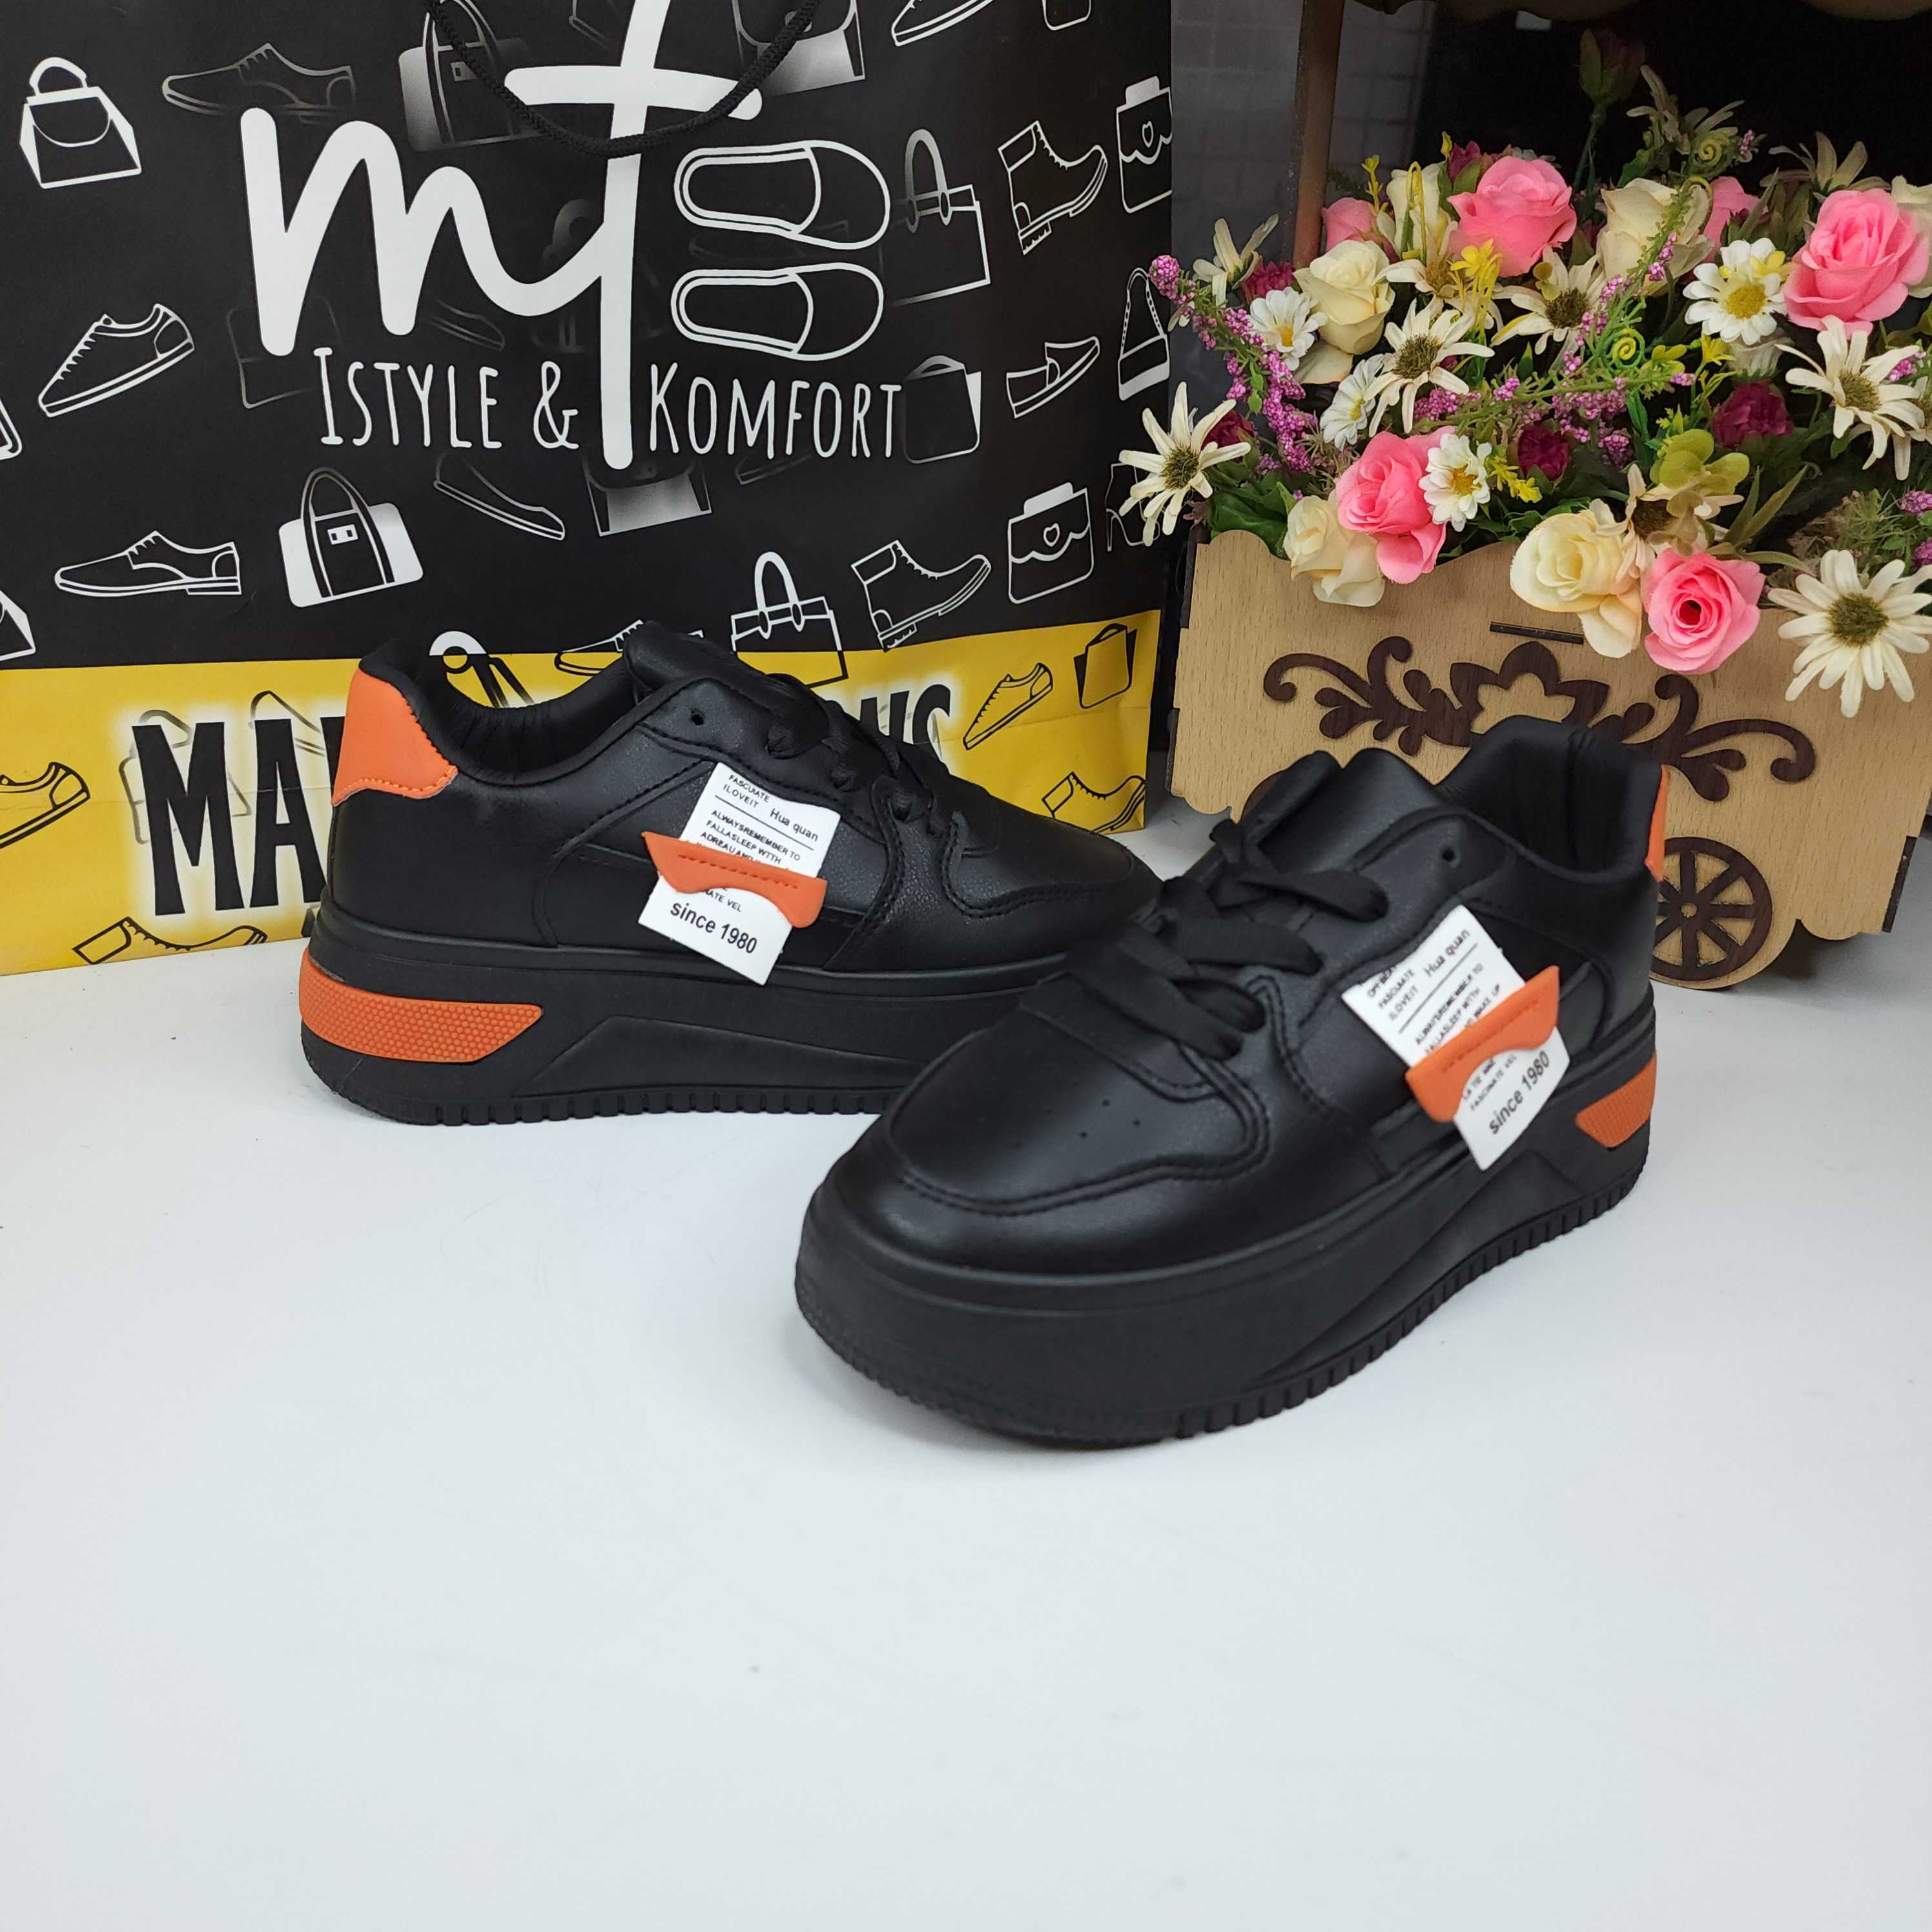 Black High Sole Sneakers - Maha fashions -  